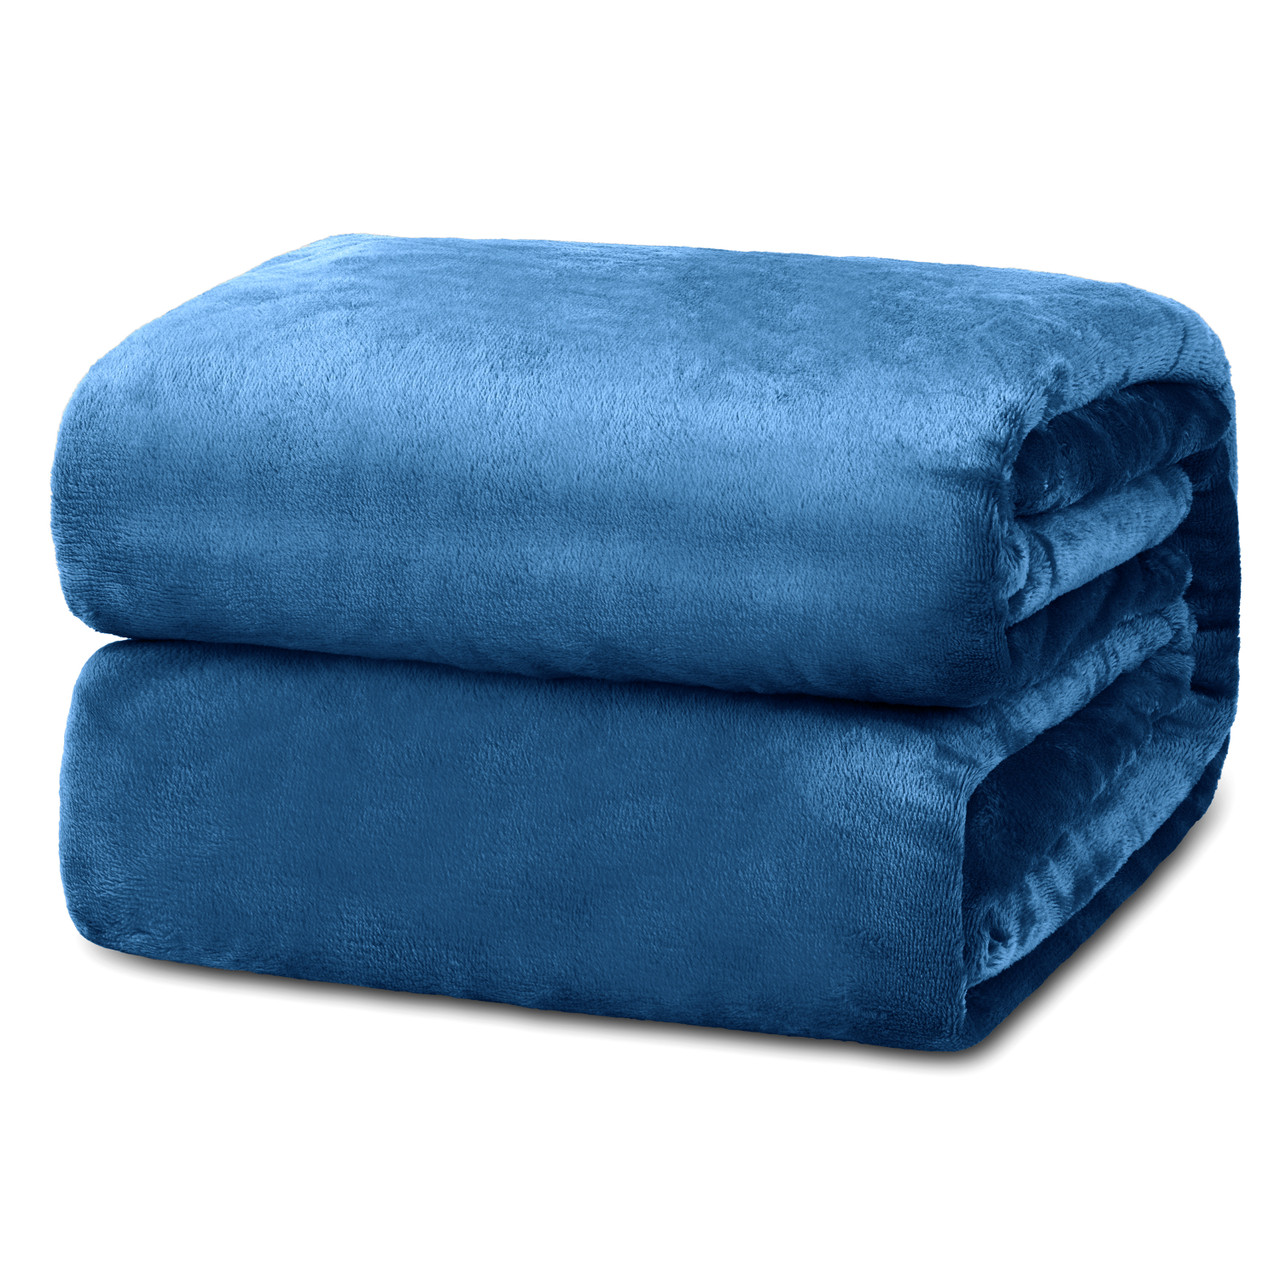 Warm and Soft Microfiber Fleece Blanket product image